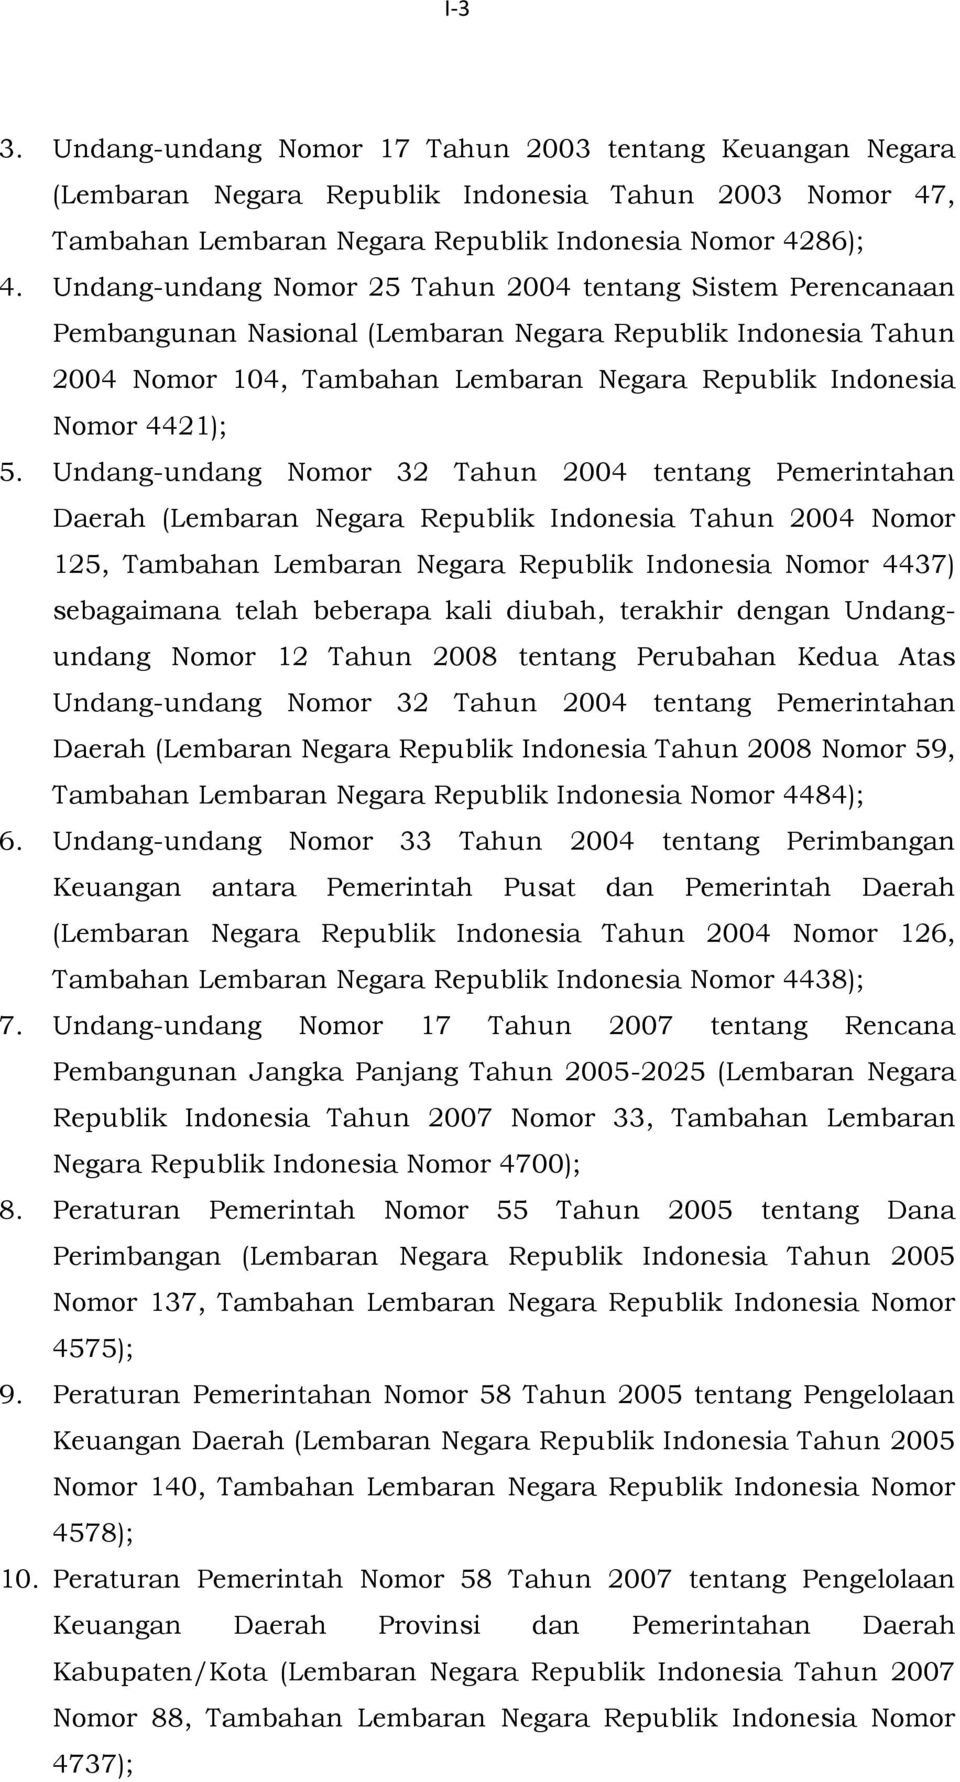 Undang-undang Nomor 32 Tahun 2004 tentang Pemerintahan Daerah (Lembaran Negara Republik Indonesia Tahun 2004 Nomor 125, Tambahan Lembaran Negara Republik Indonesia Nomor 4437) sebagaimana telah